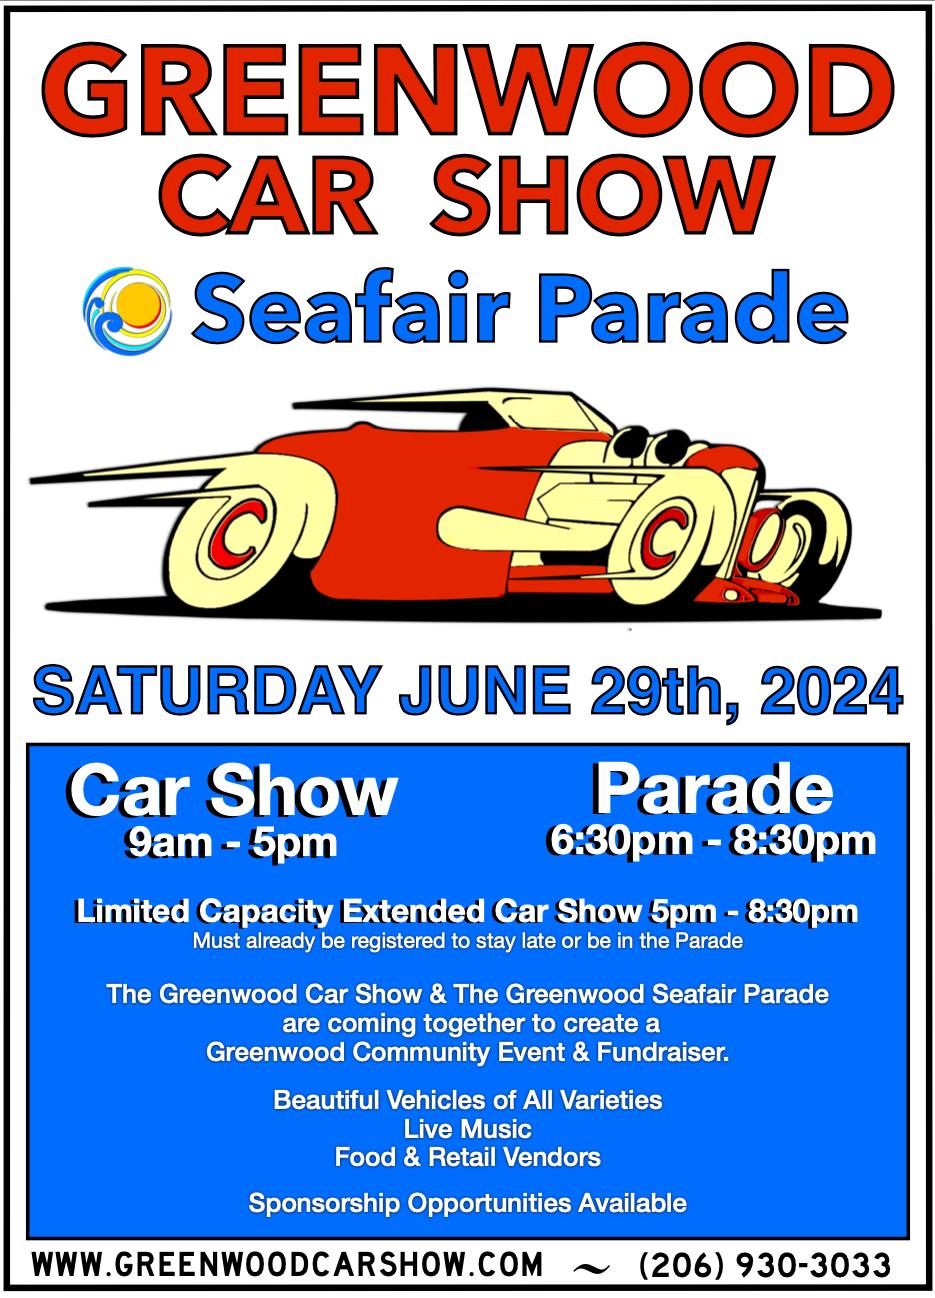 Greenwood Car Show & Greenwood Seafair Parade